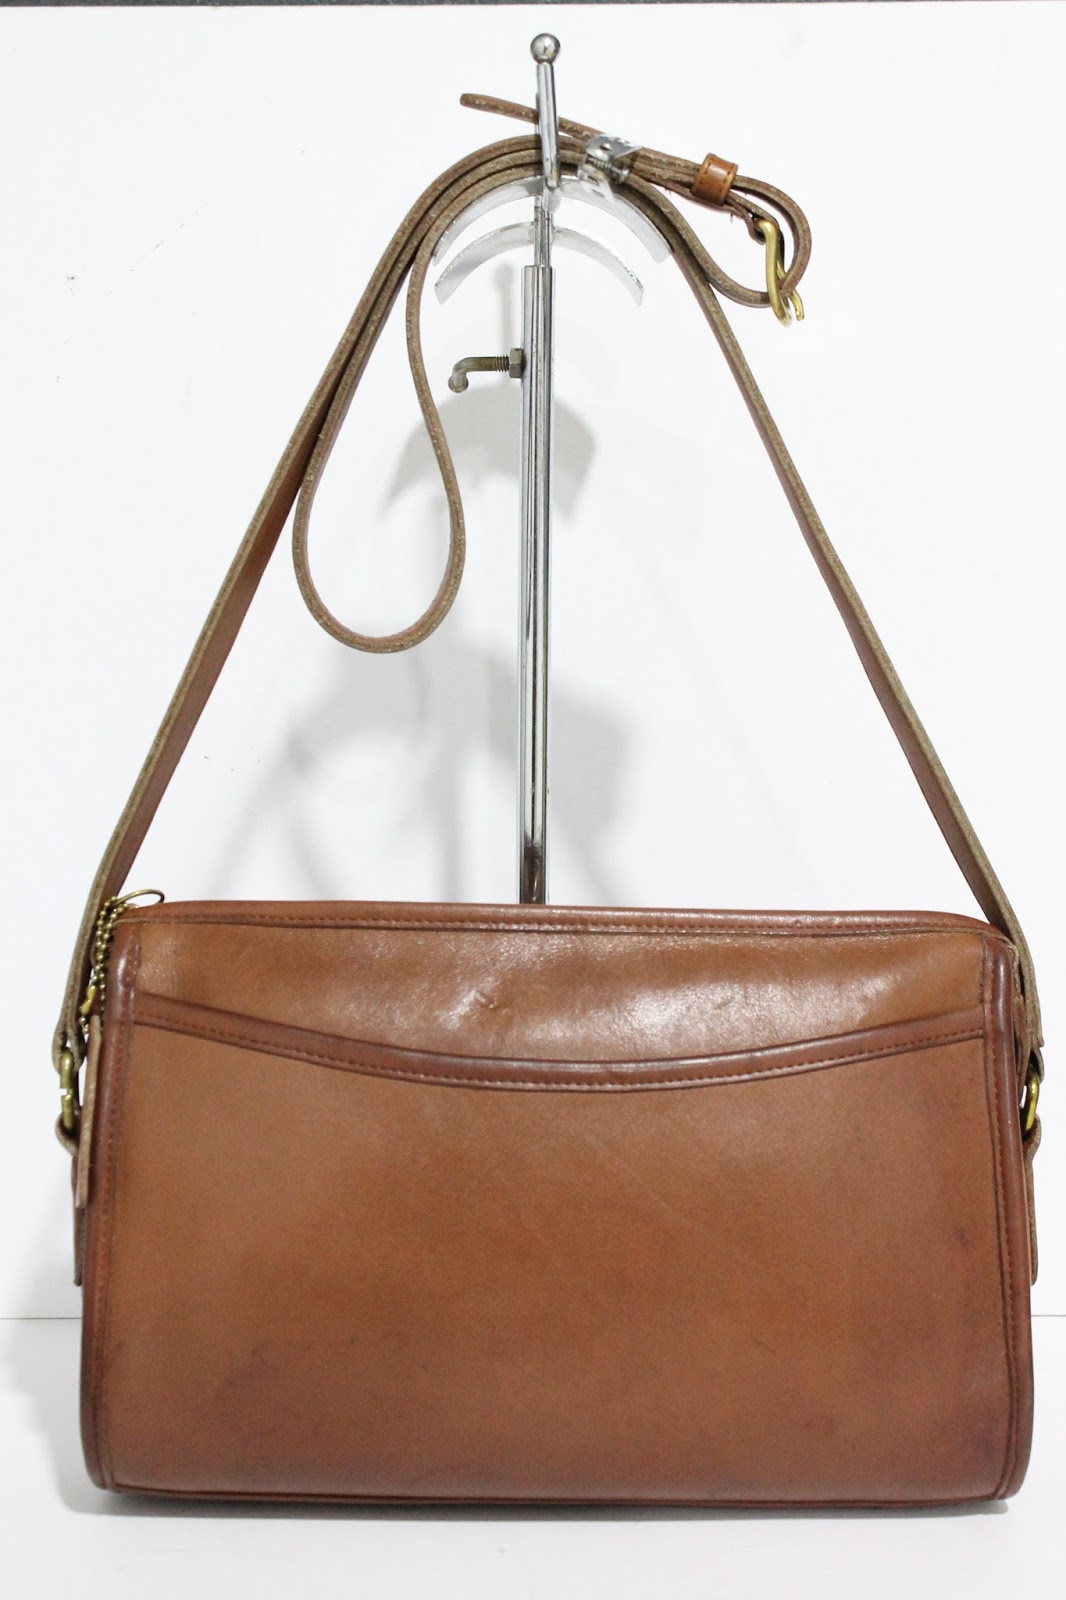 BUNDLEBARANGBAEK: Authentic COACH Leather Sling Bag.(SOLD)